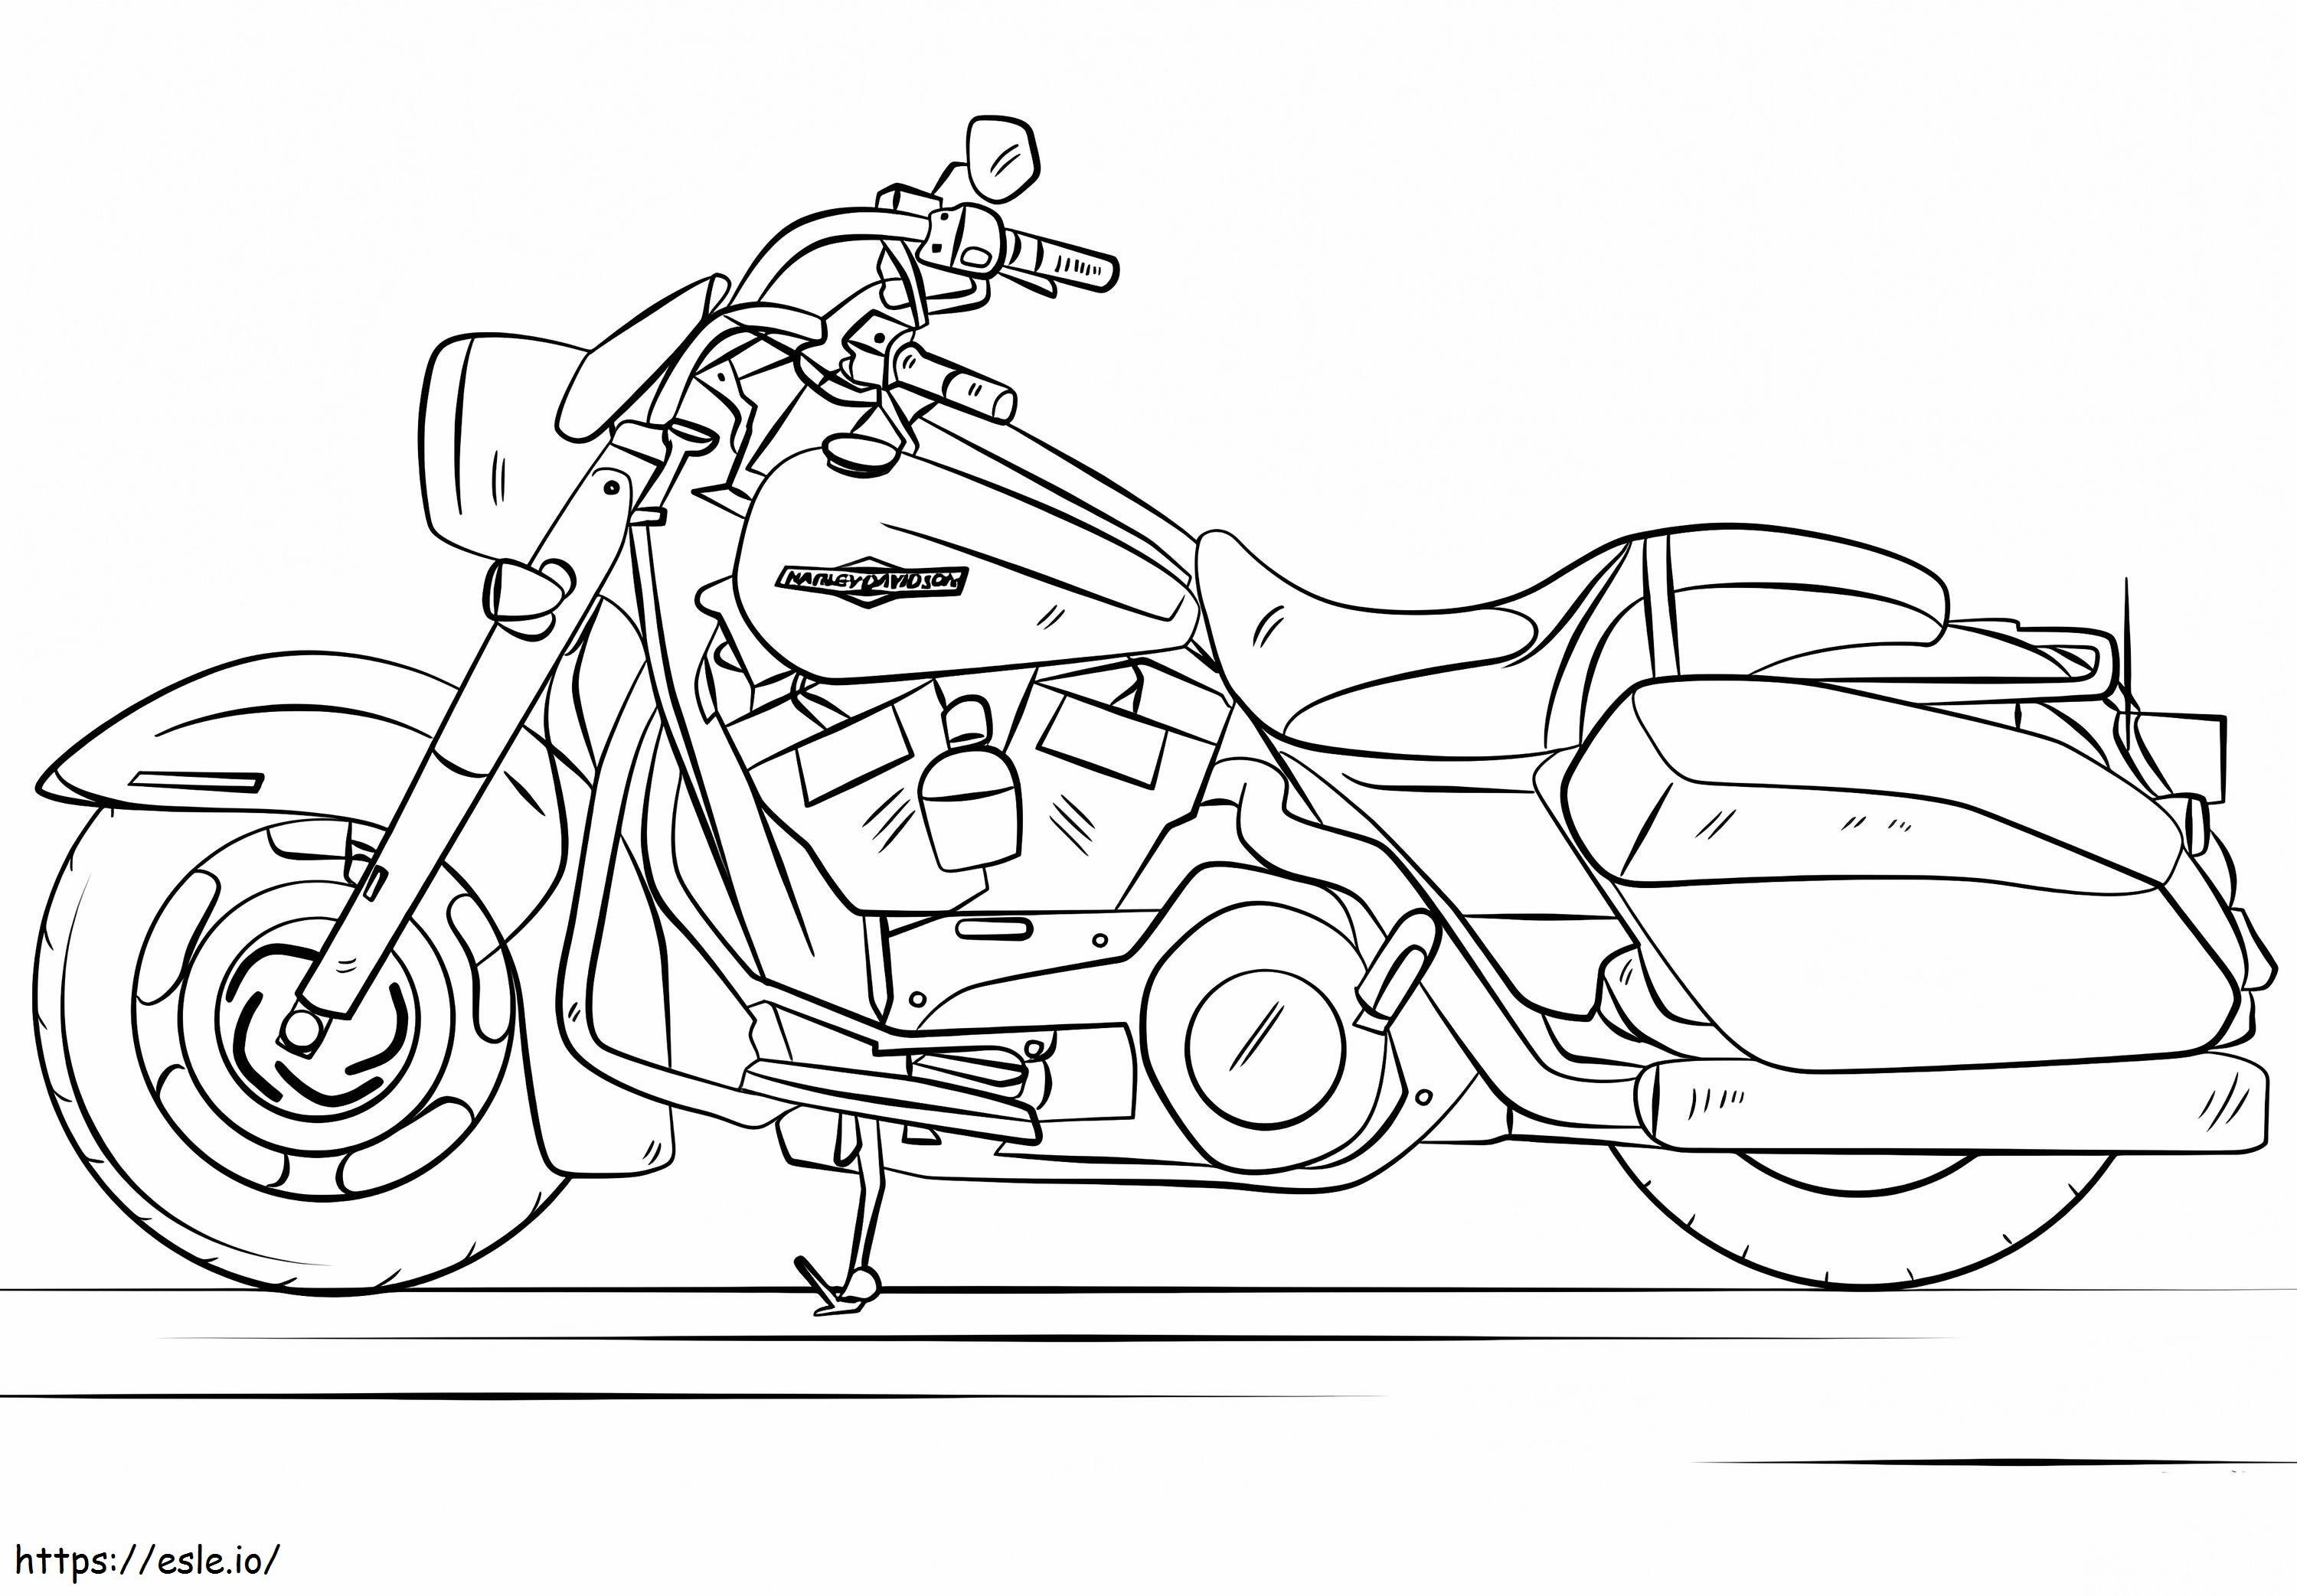 Motocicleta Harley Davidson legal para colorir